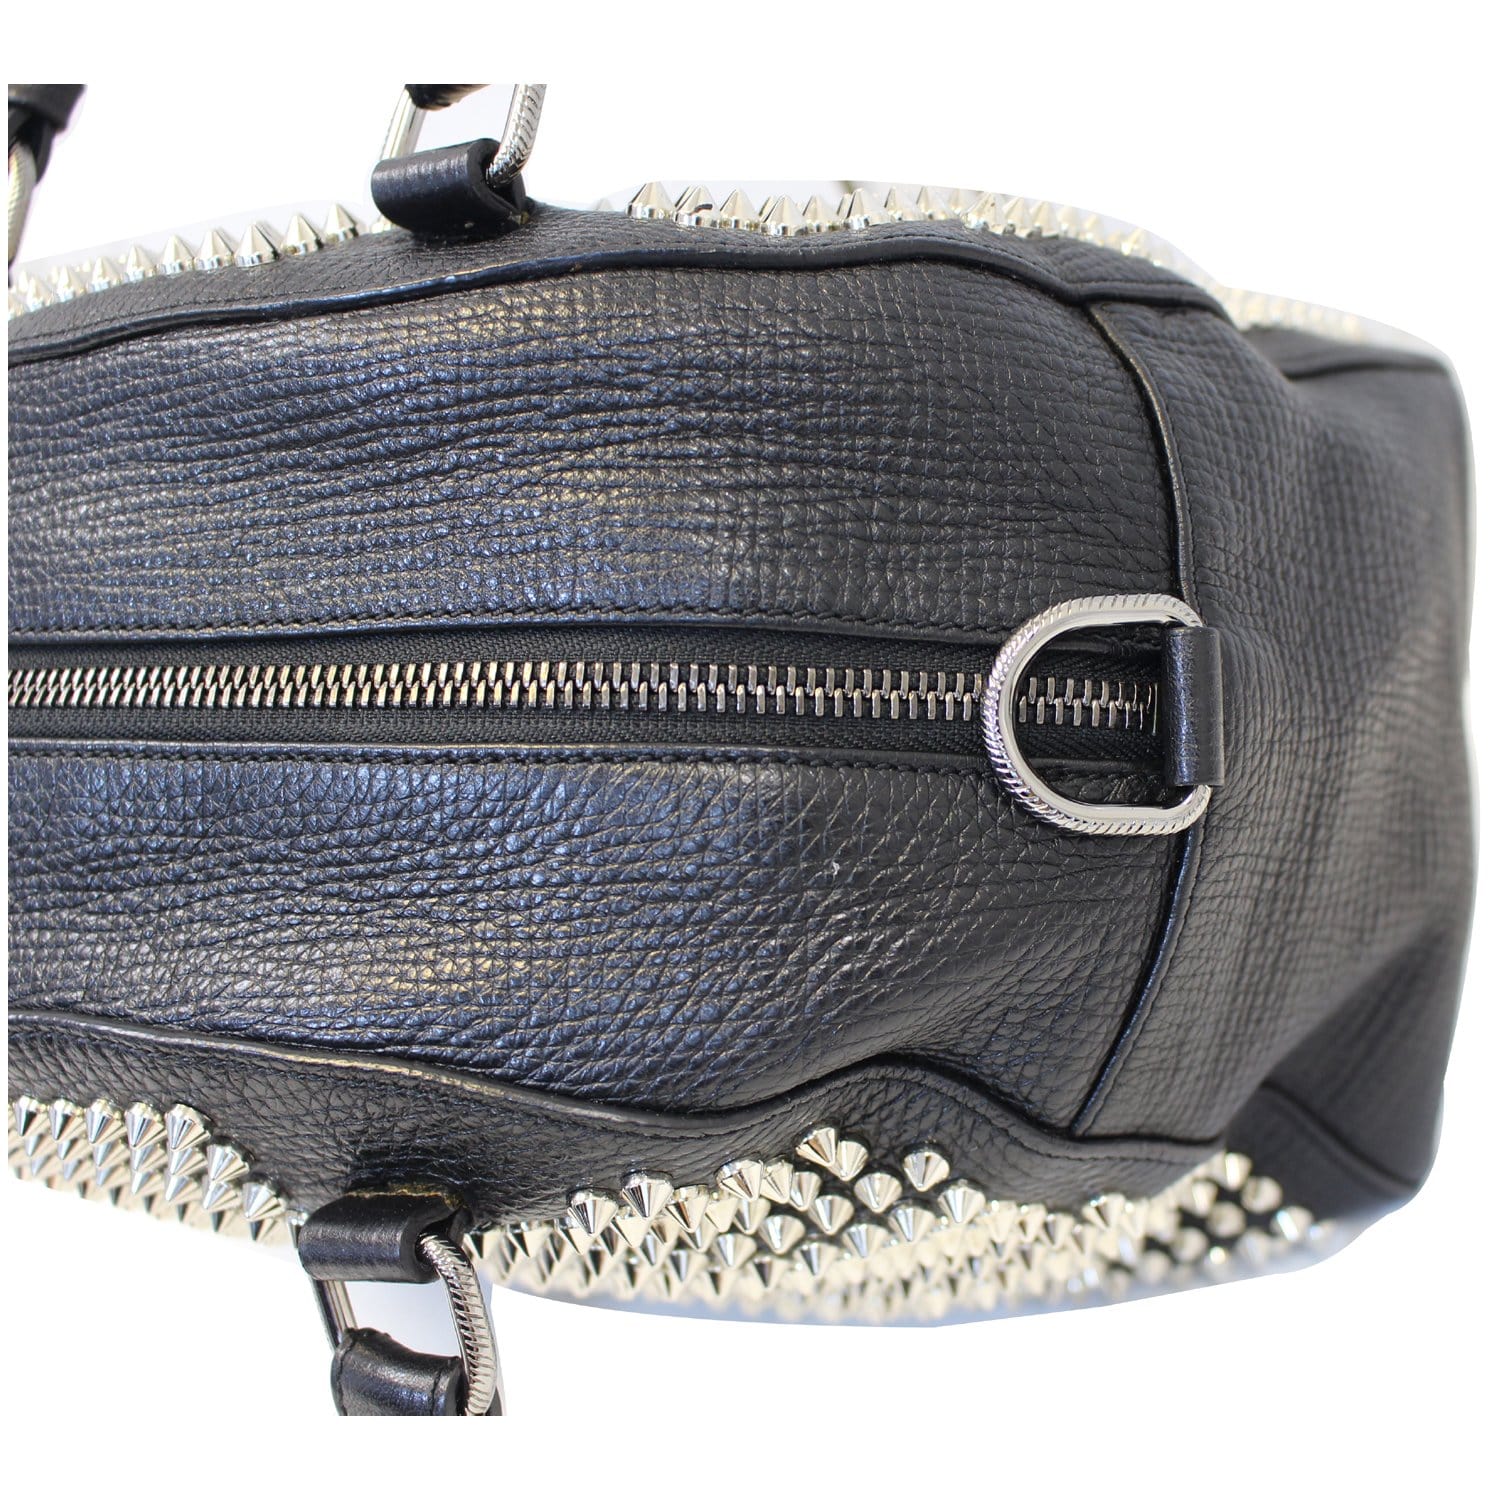 Christian Louboutin Panettone Spike Stud Leather Handbag